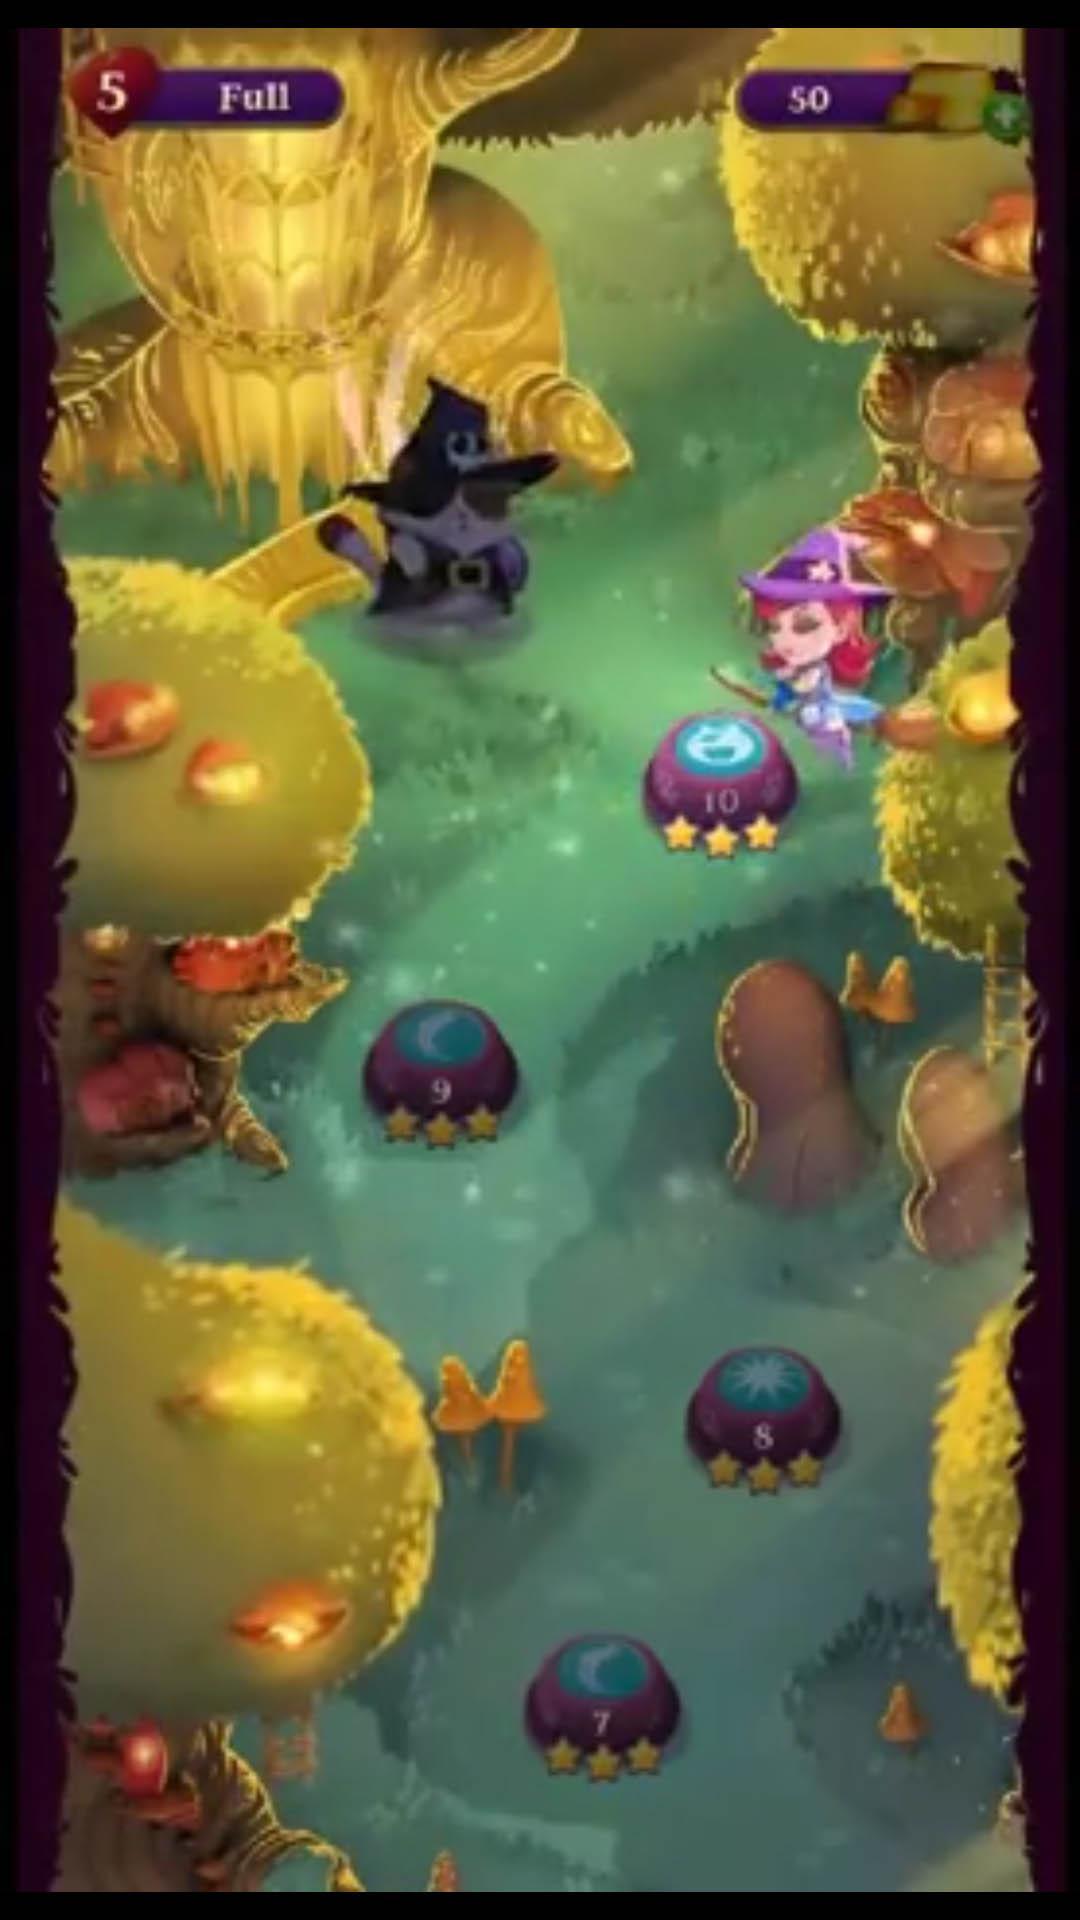 Download do APK de Guide: Bubble Witch 3 Saga para Android